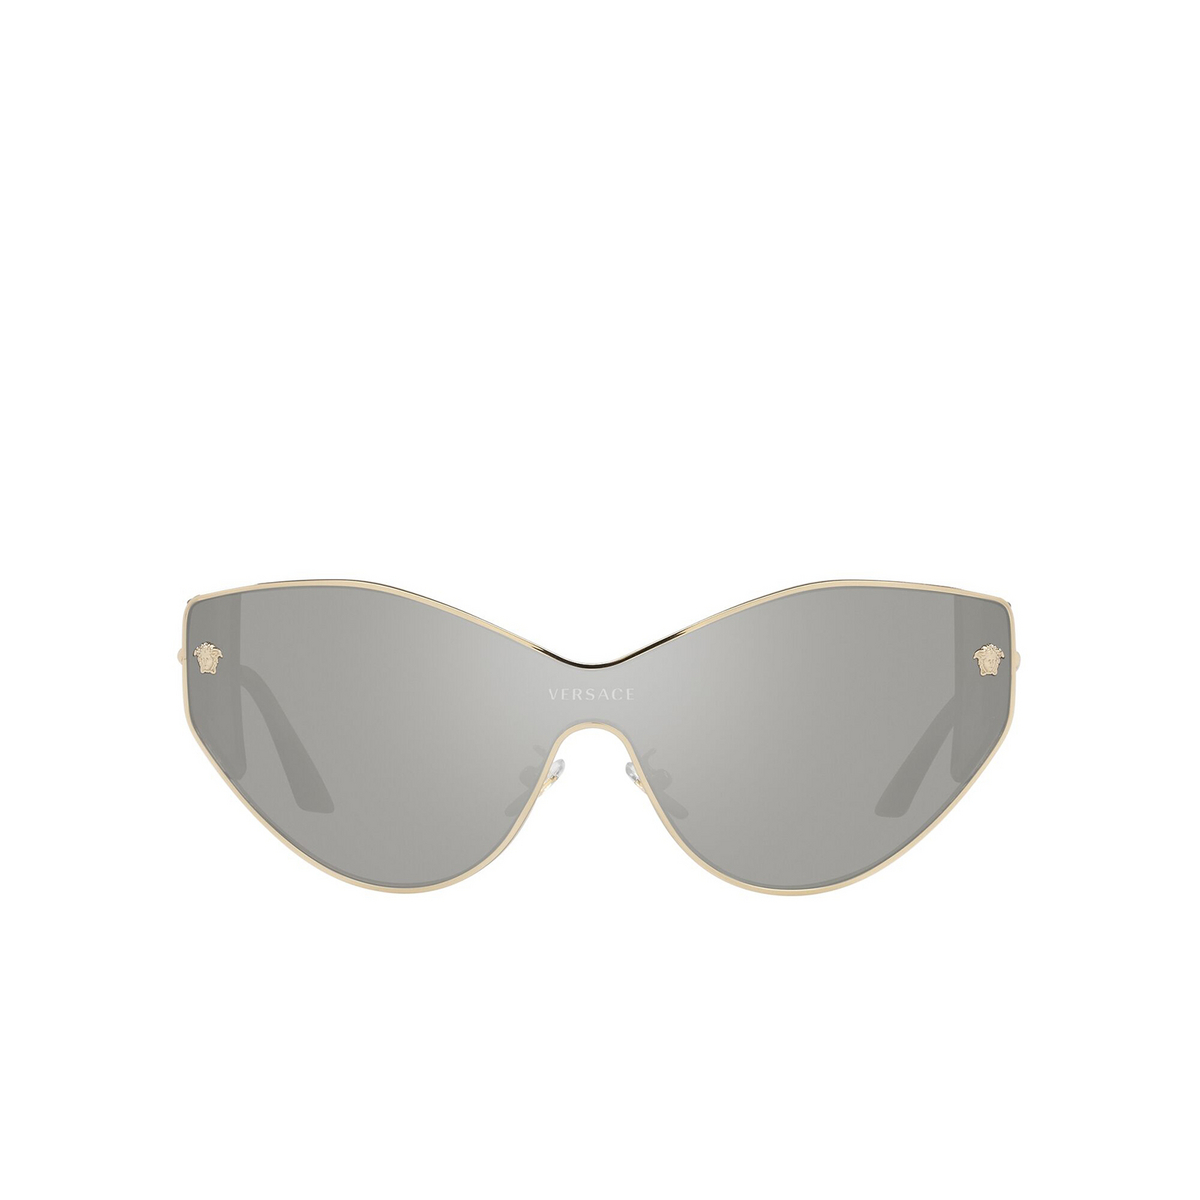 Versace® Cat-eye Sunglasses: VE2239 color Pale Gold 12526G - front view.